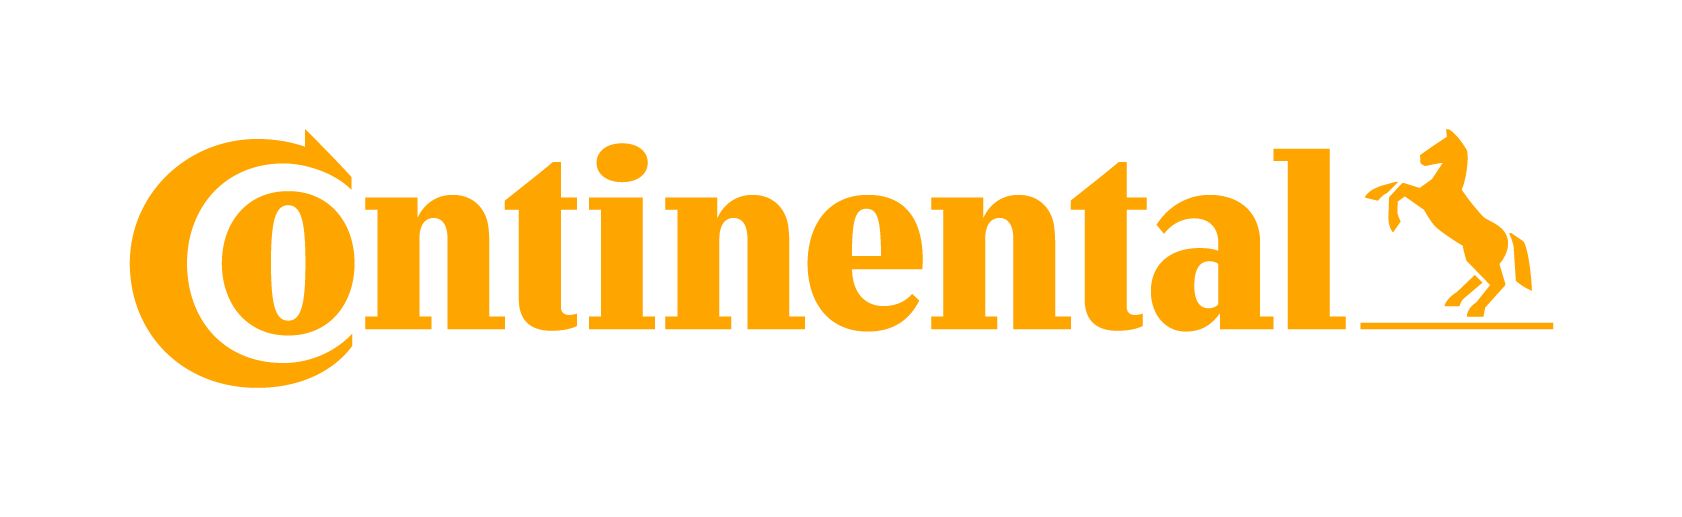 Continental logo Continental 